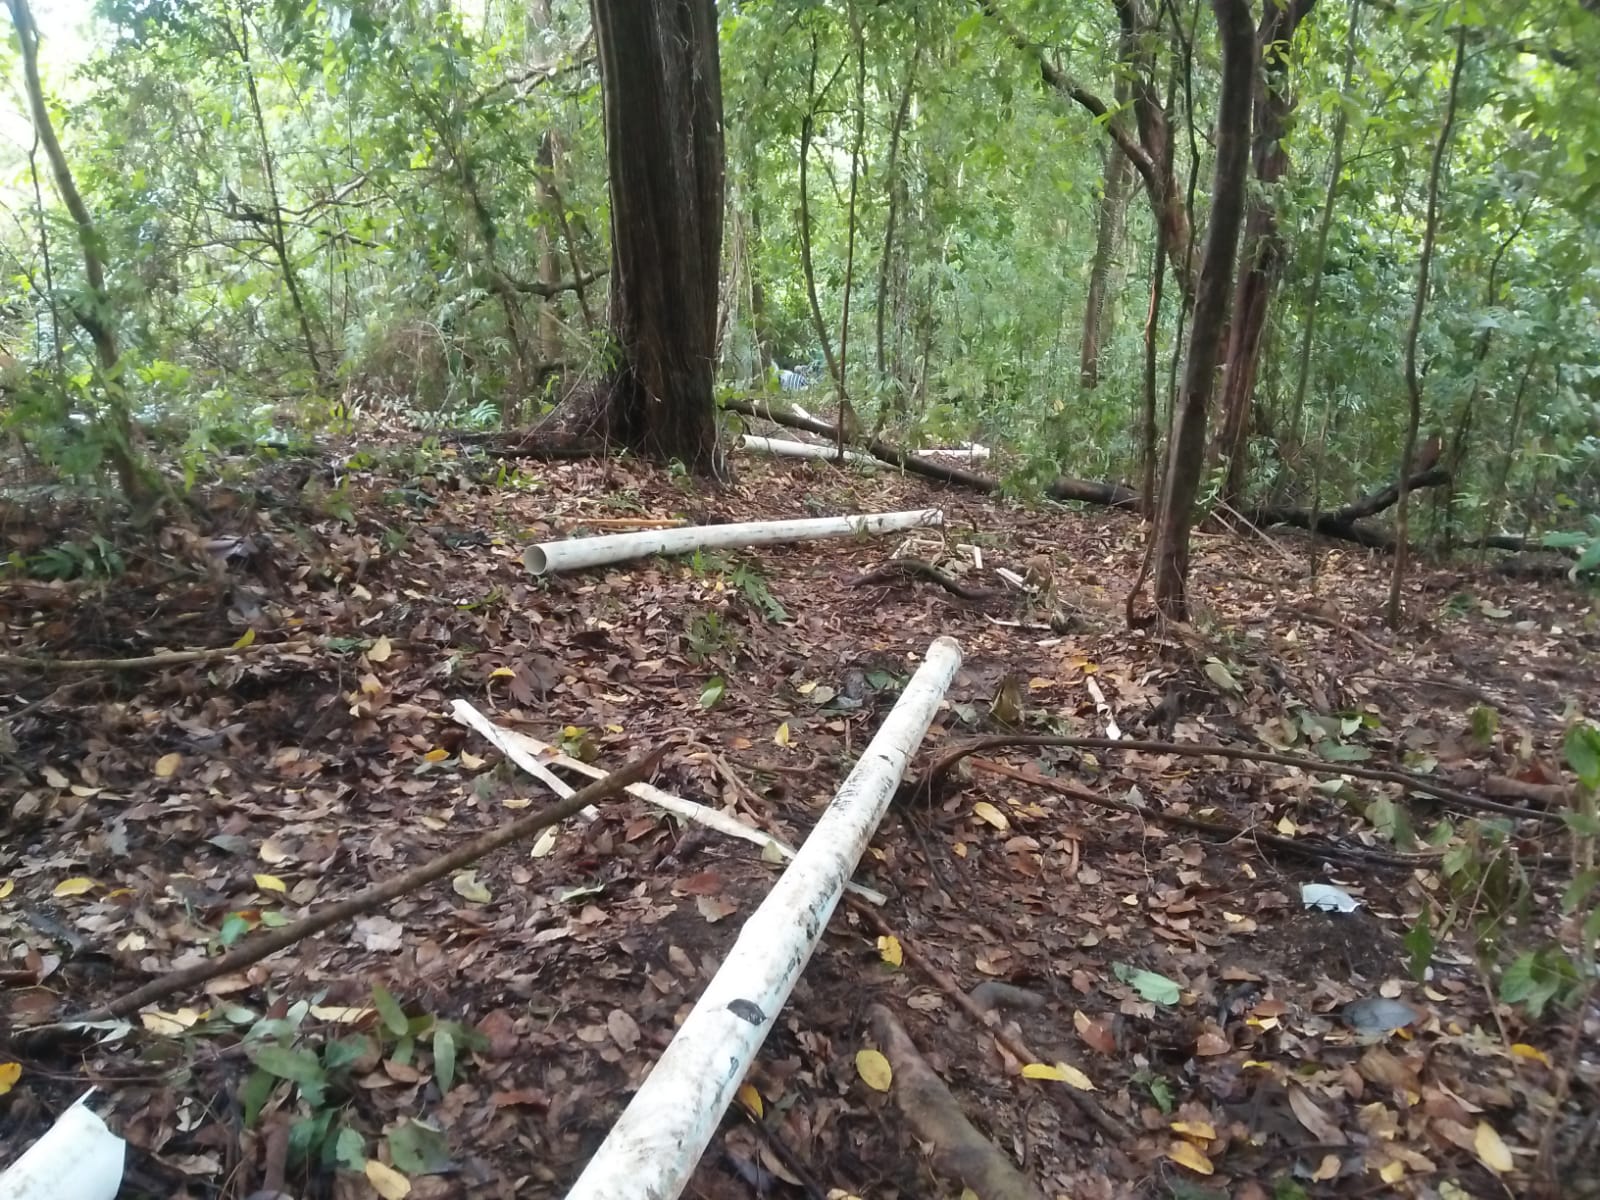 Saluran Pipa Air Bersih Masyarakat Gunungratu Dirusak Gajah, 300 KK Kesulitan Air Bersih